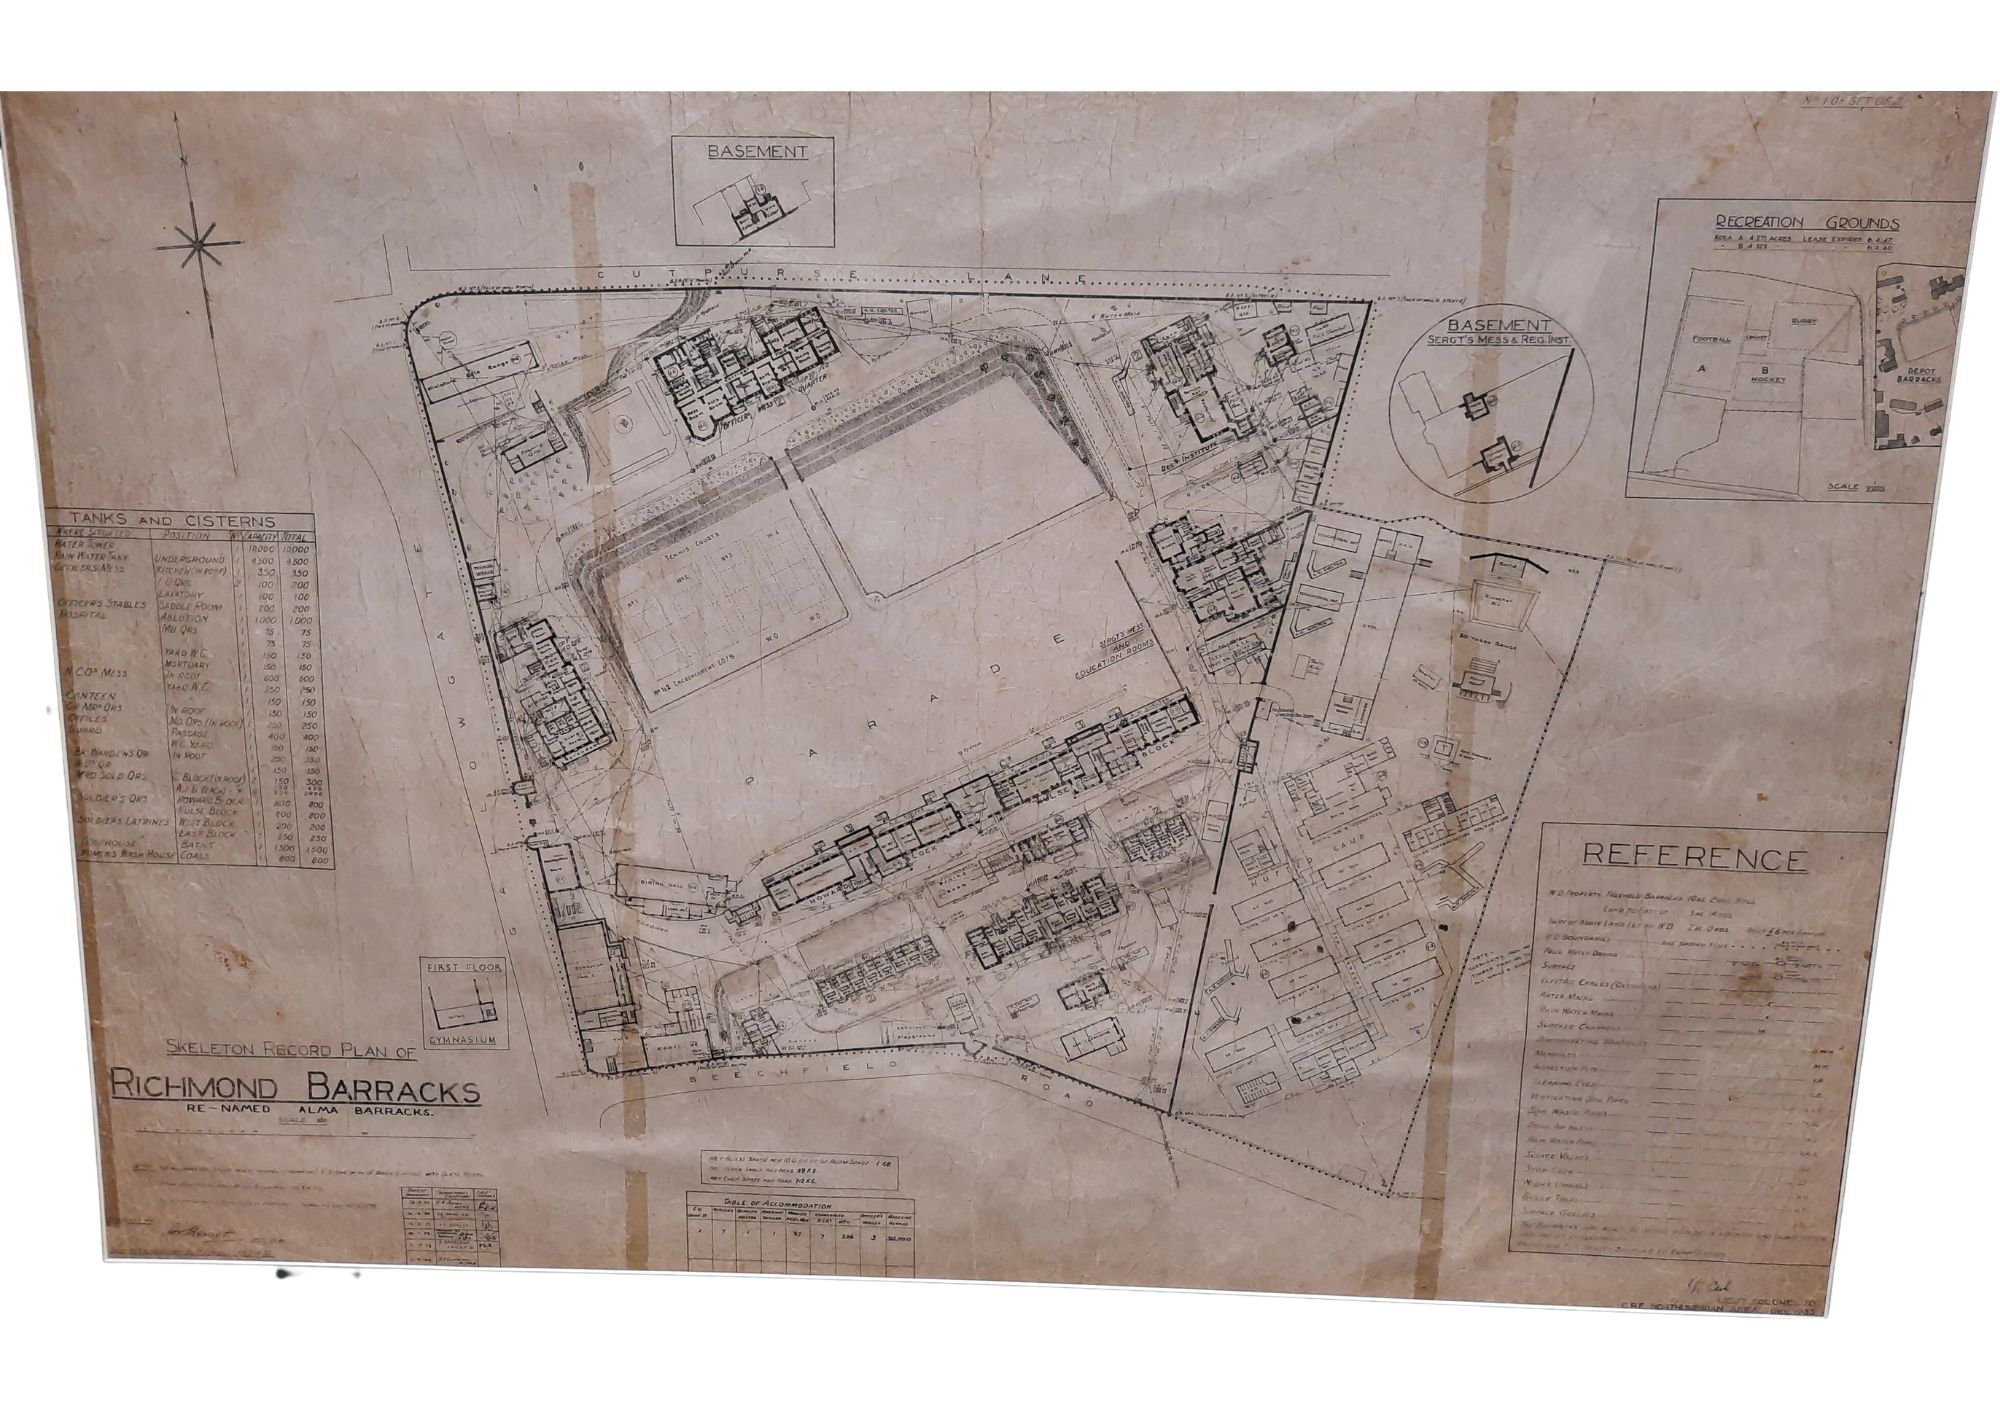 image of an ink plan of Richmond Barracks